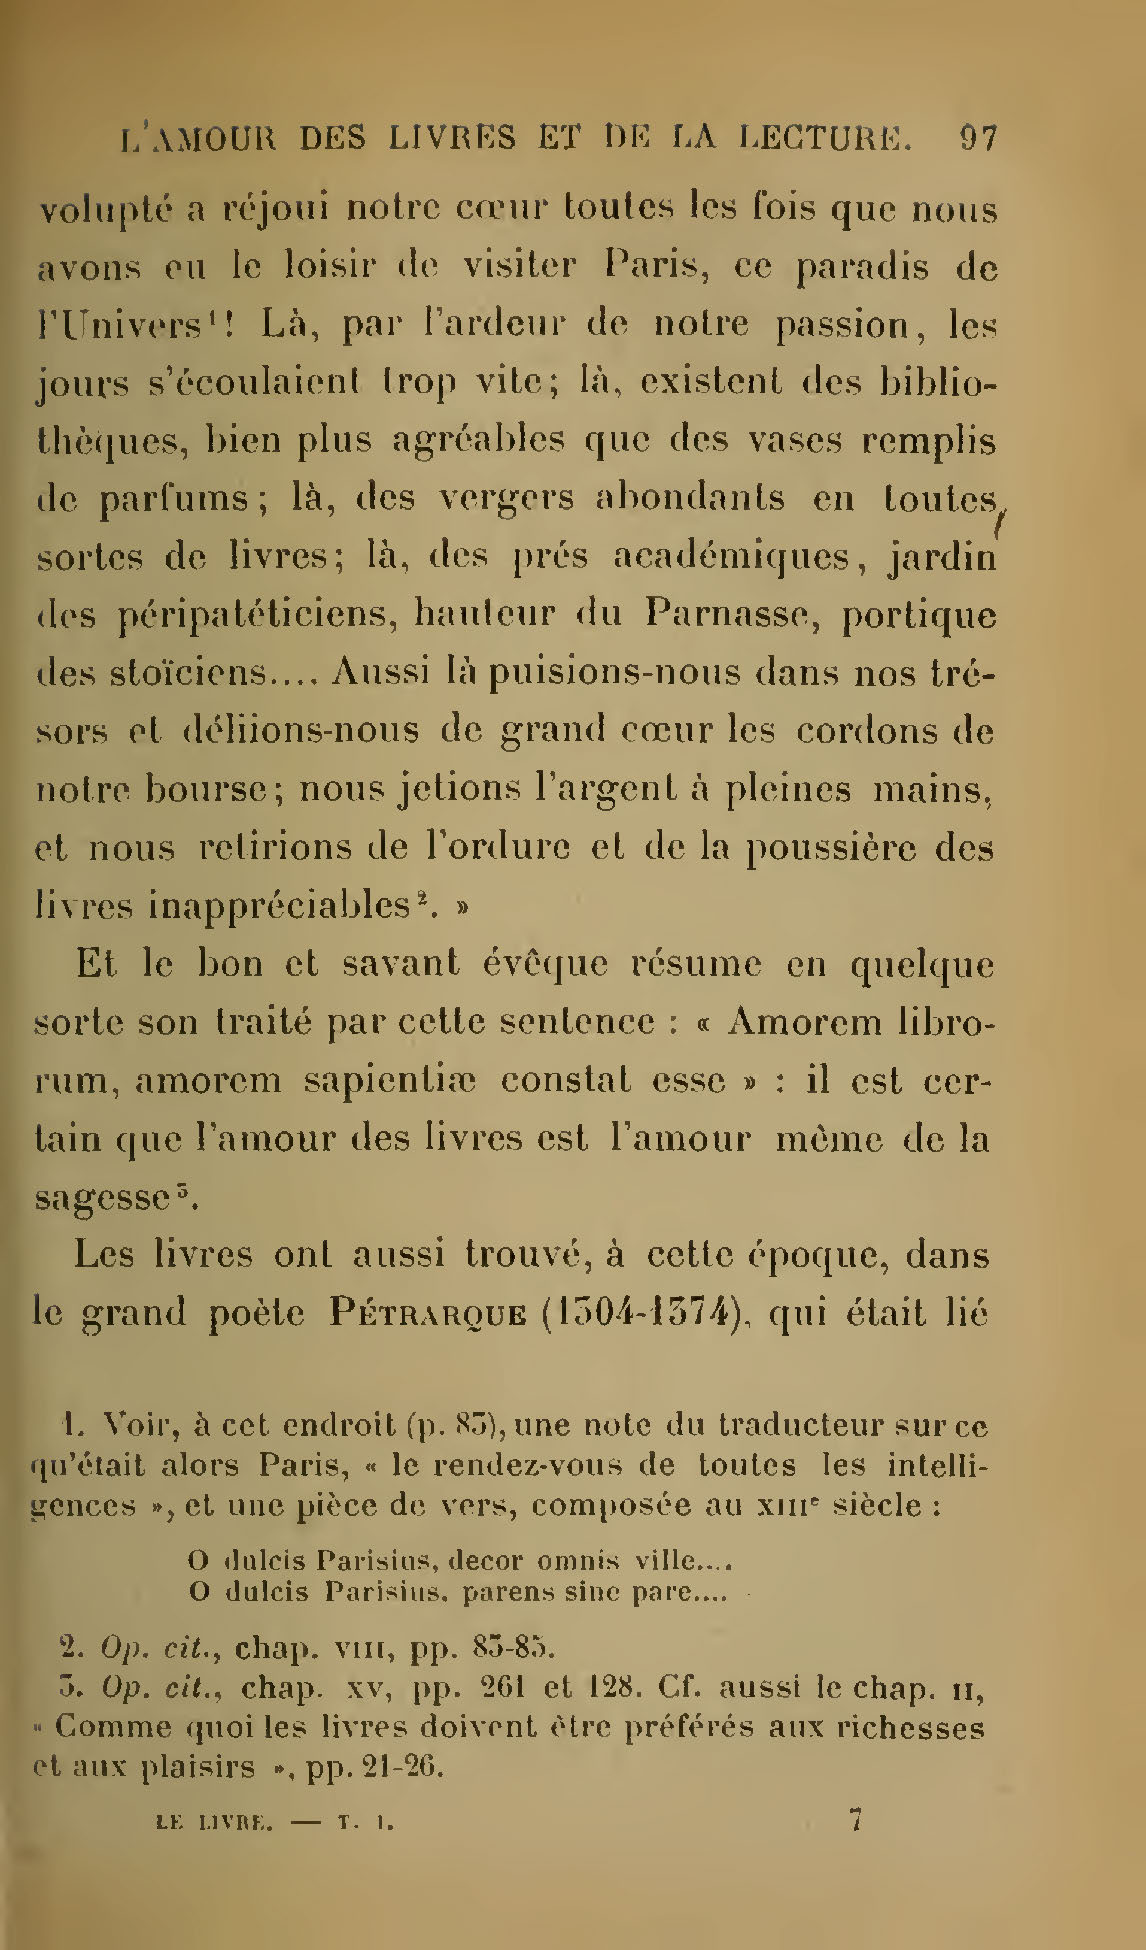 Albert Cim, Le Livre, t. I, p. 97.